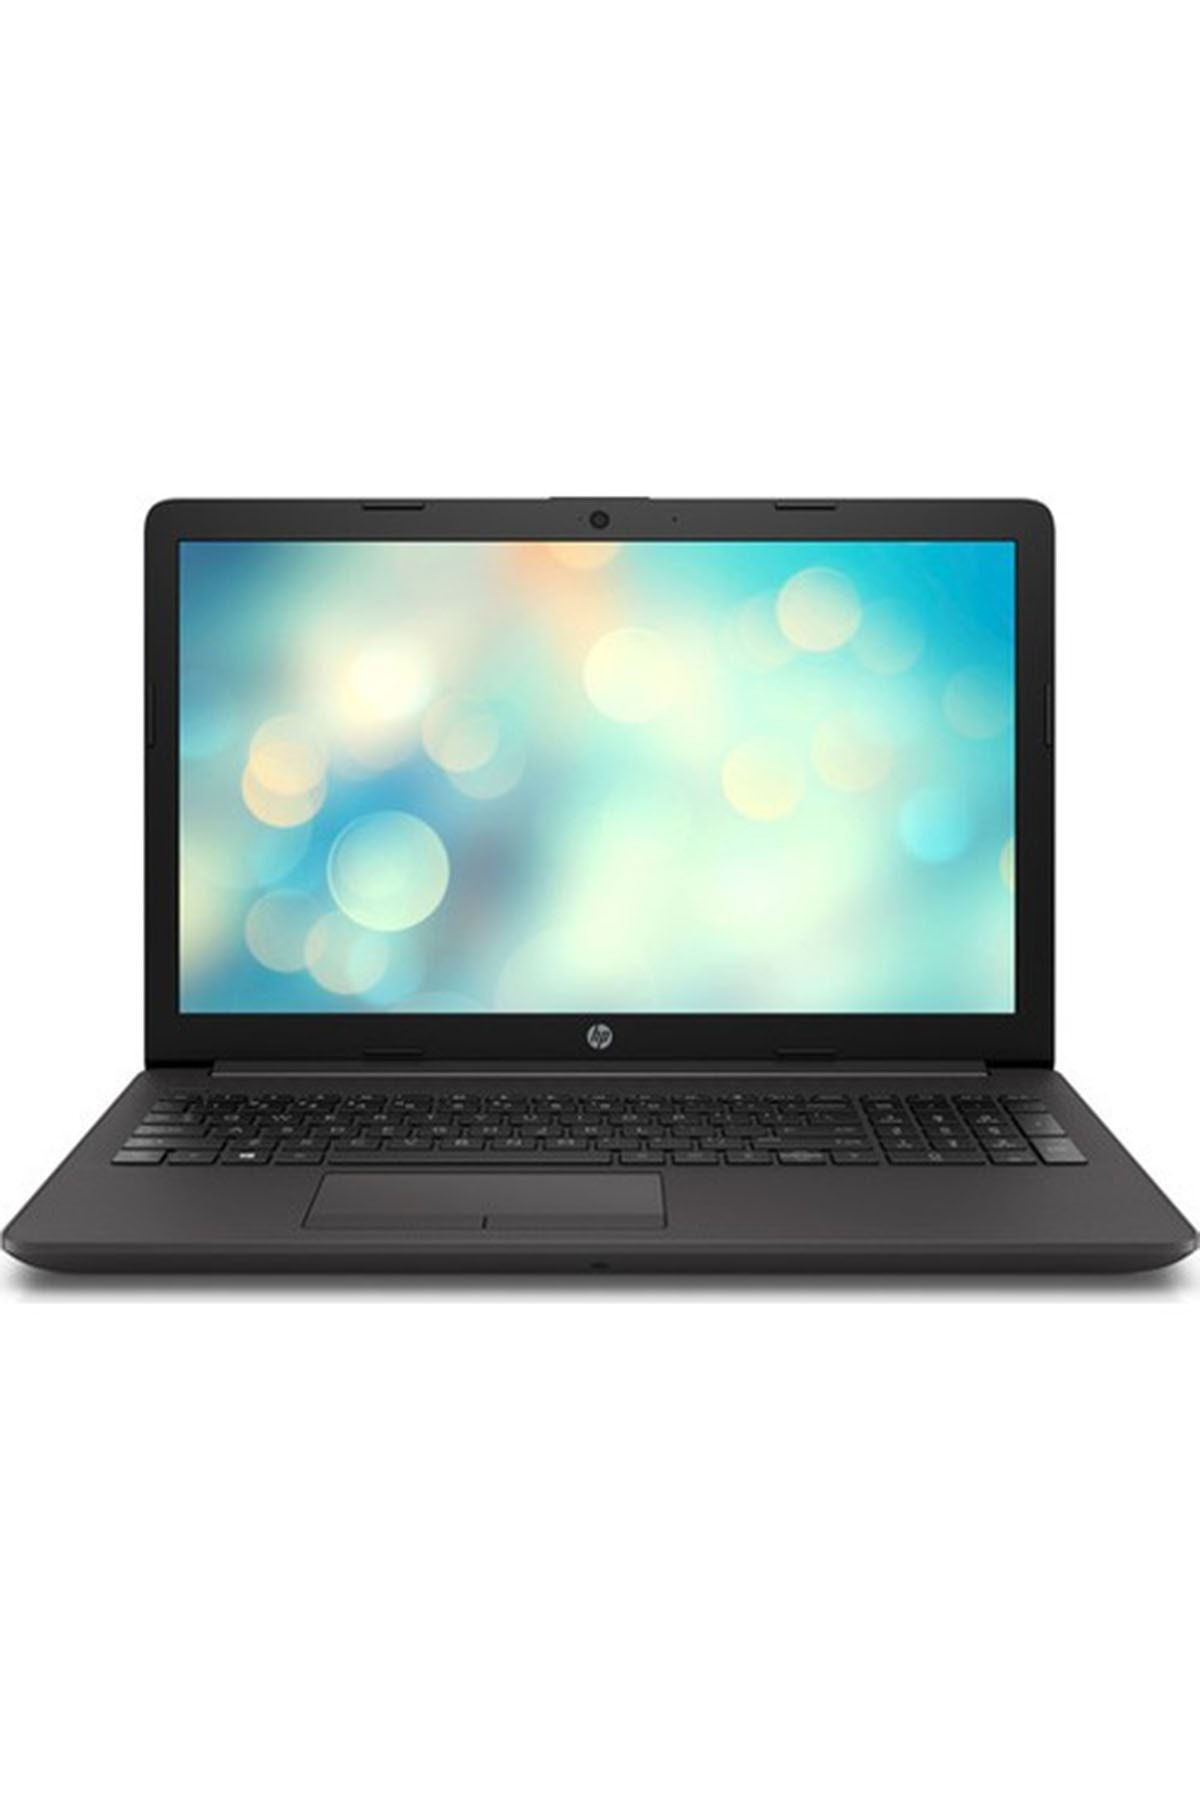 HP 250 G7 14z83ea I5 1035g1 8gb 256ssd Mx110 15.6' Freedos Fullhd Taşınabilir Bilgisayar